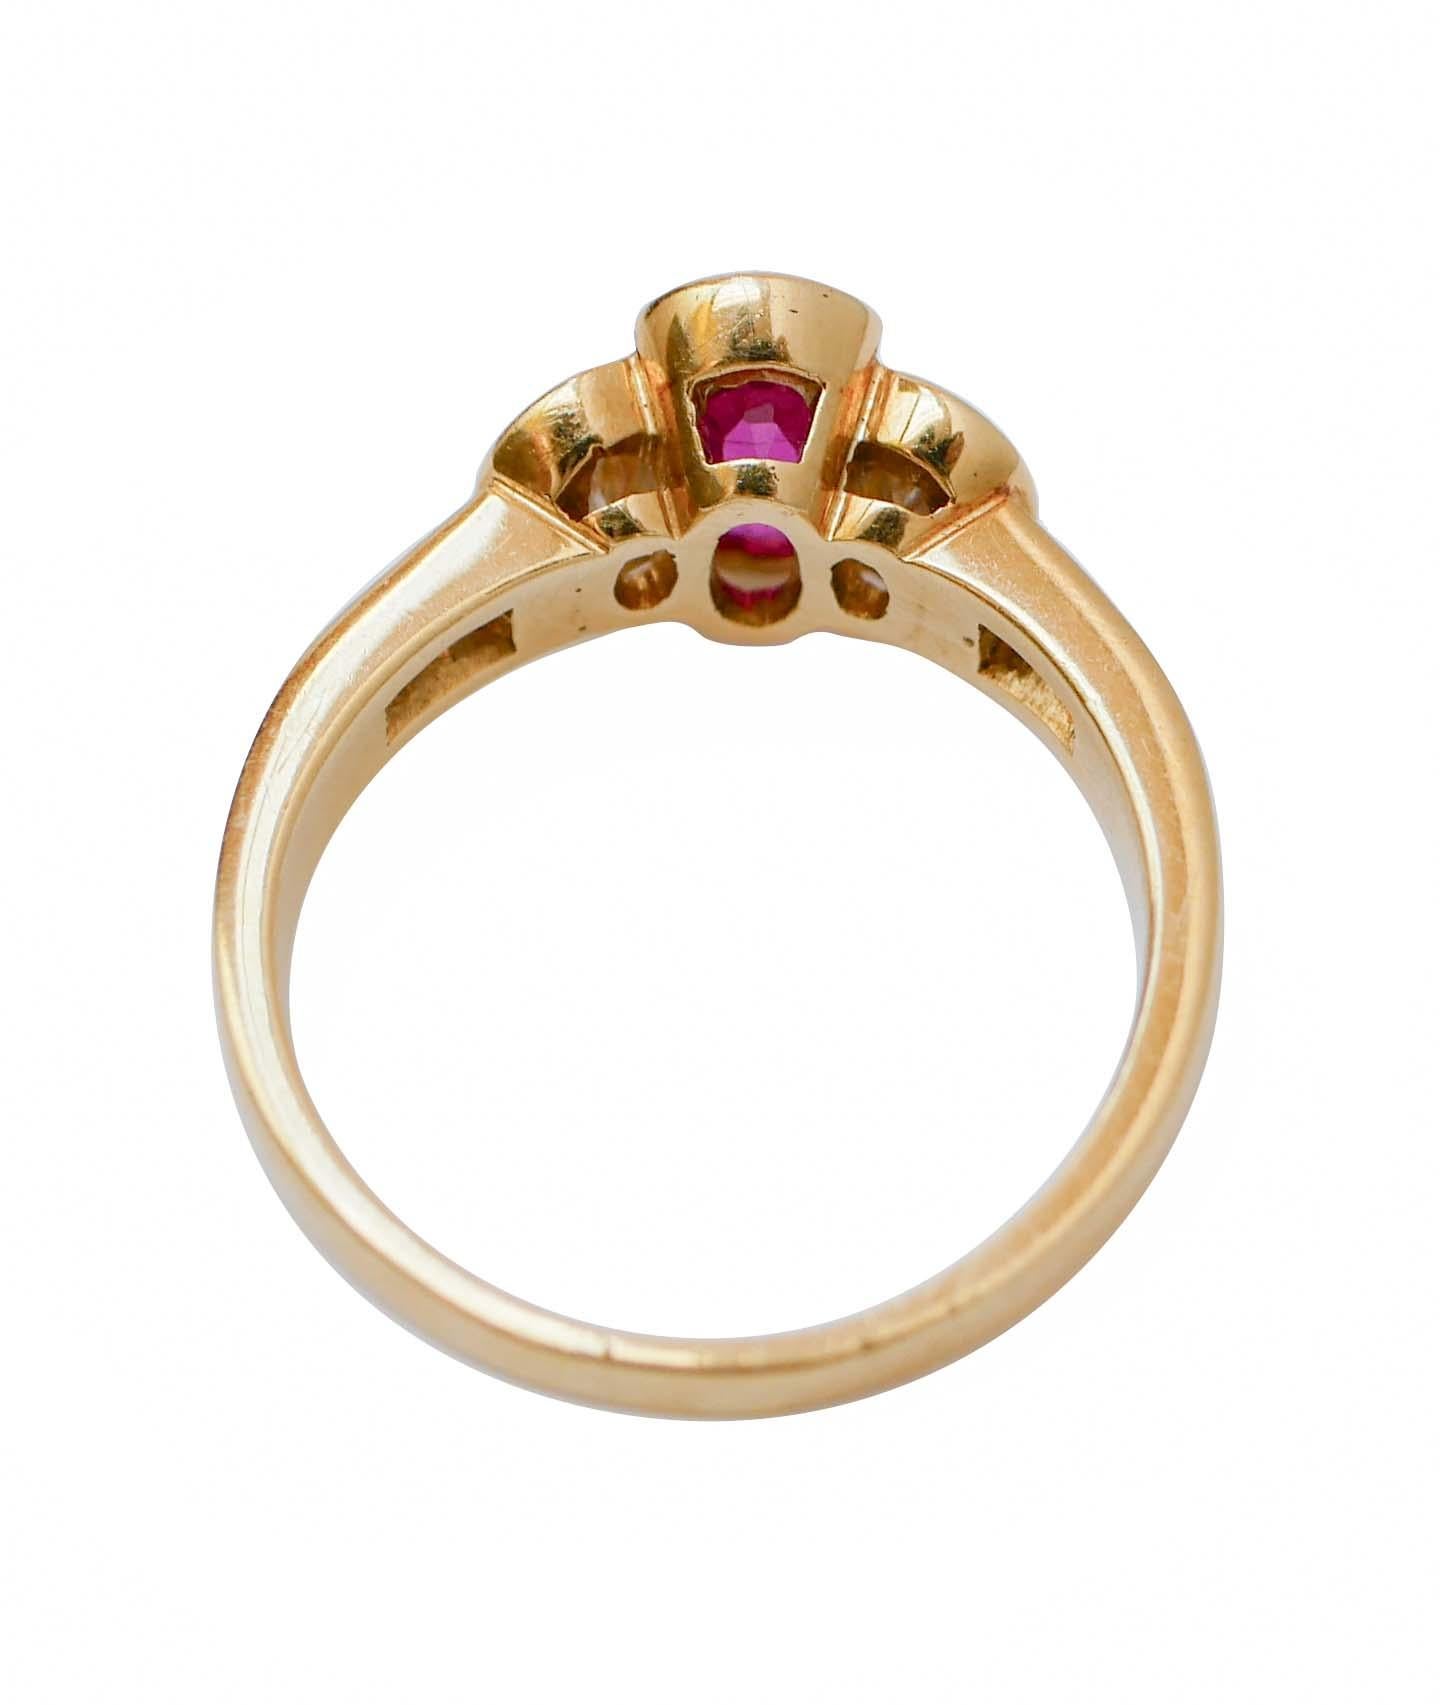 Retro Ruby, Diamonds, 18 Karat Yellow Gold Ring. For Sale